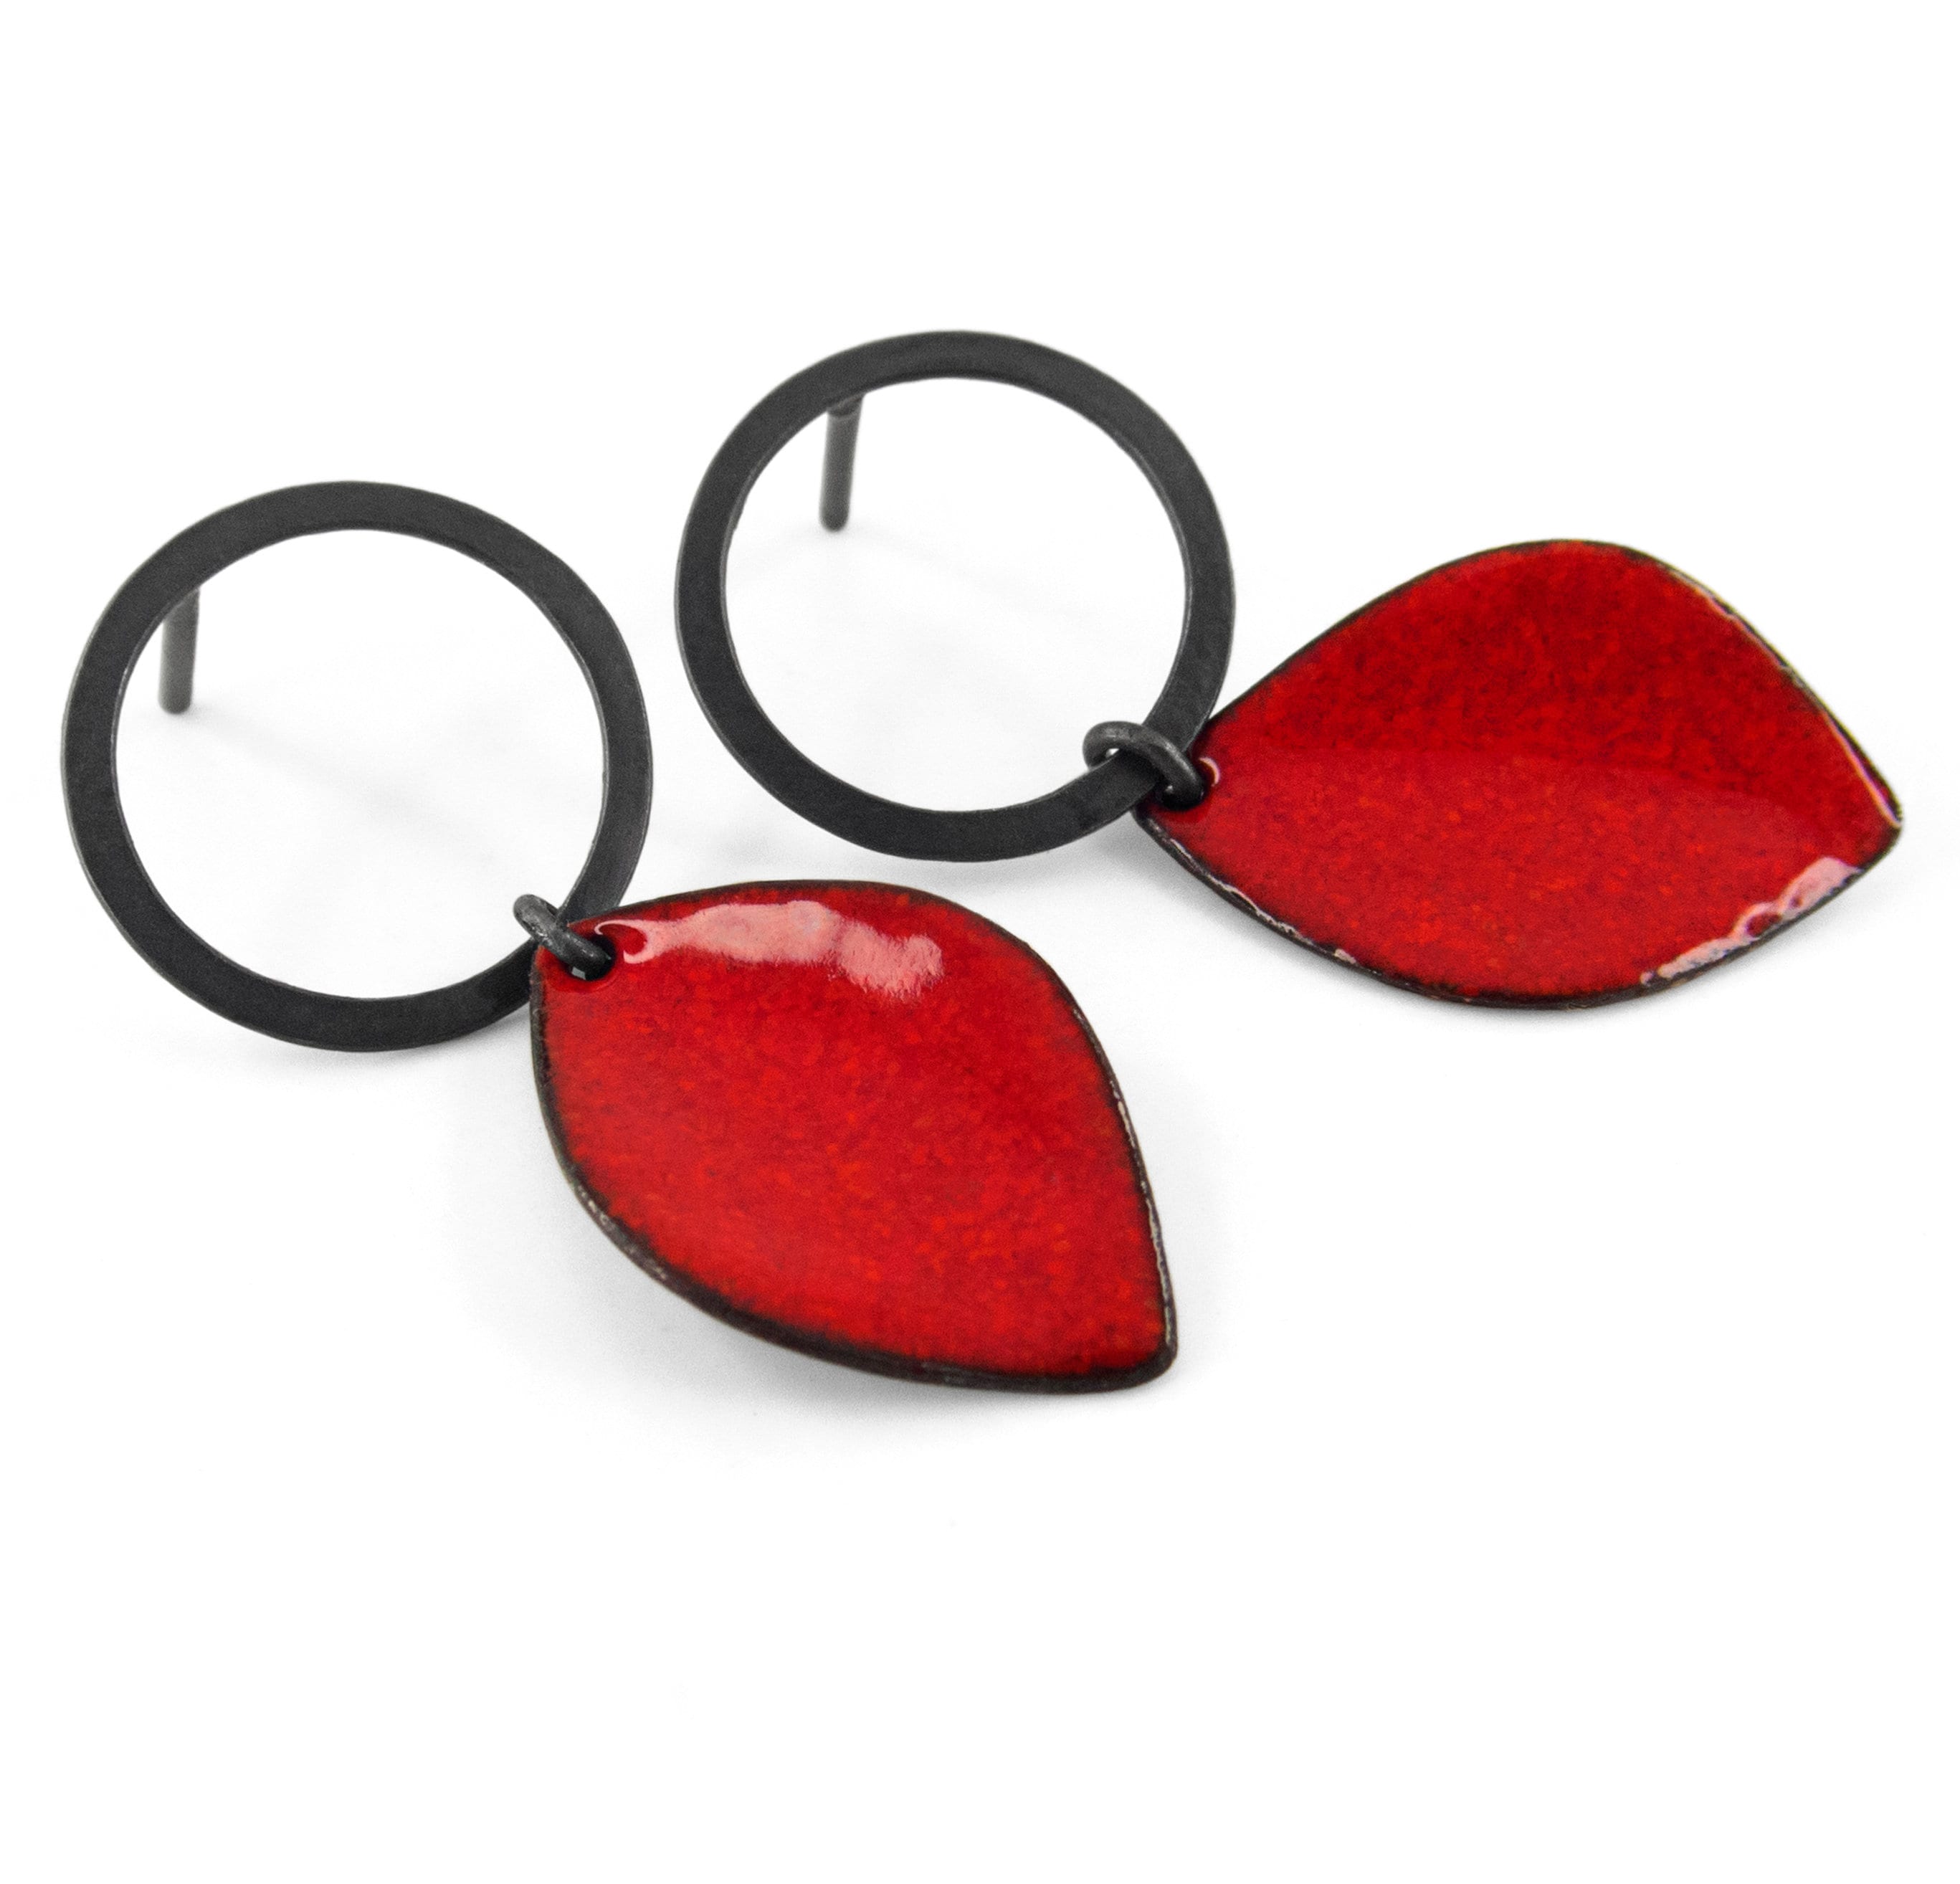 Amazon.com: Red Potara Jewelry - Potara Dangle Earrings for Men - Potara  Earrings - Potara Earrings for Women - Red Agate Jewelry - Unisex Agate  Potara Danglers (Fire - Pair): Clothing, Shoes & Jewelry